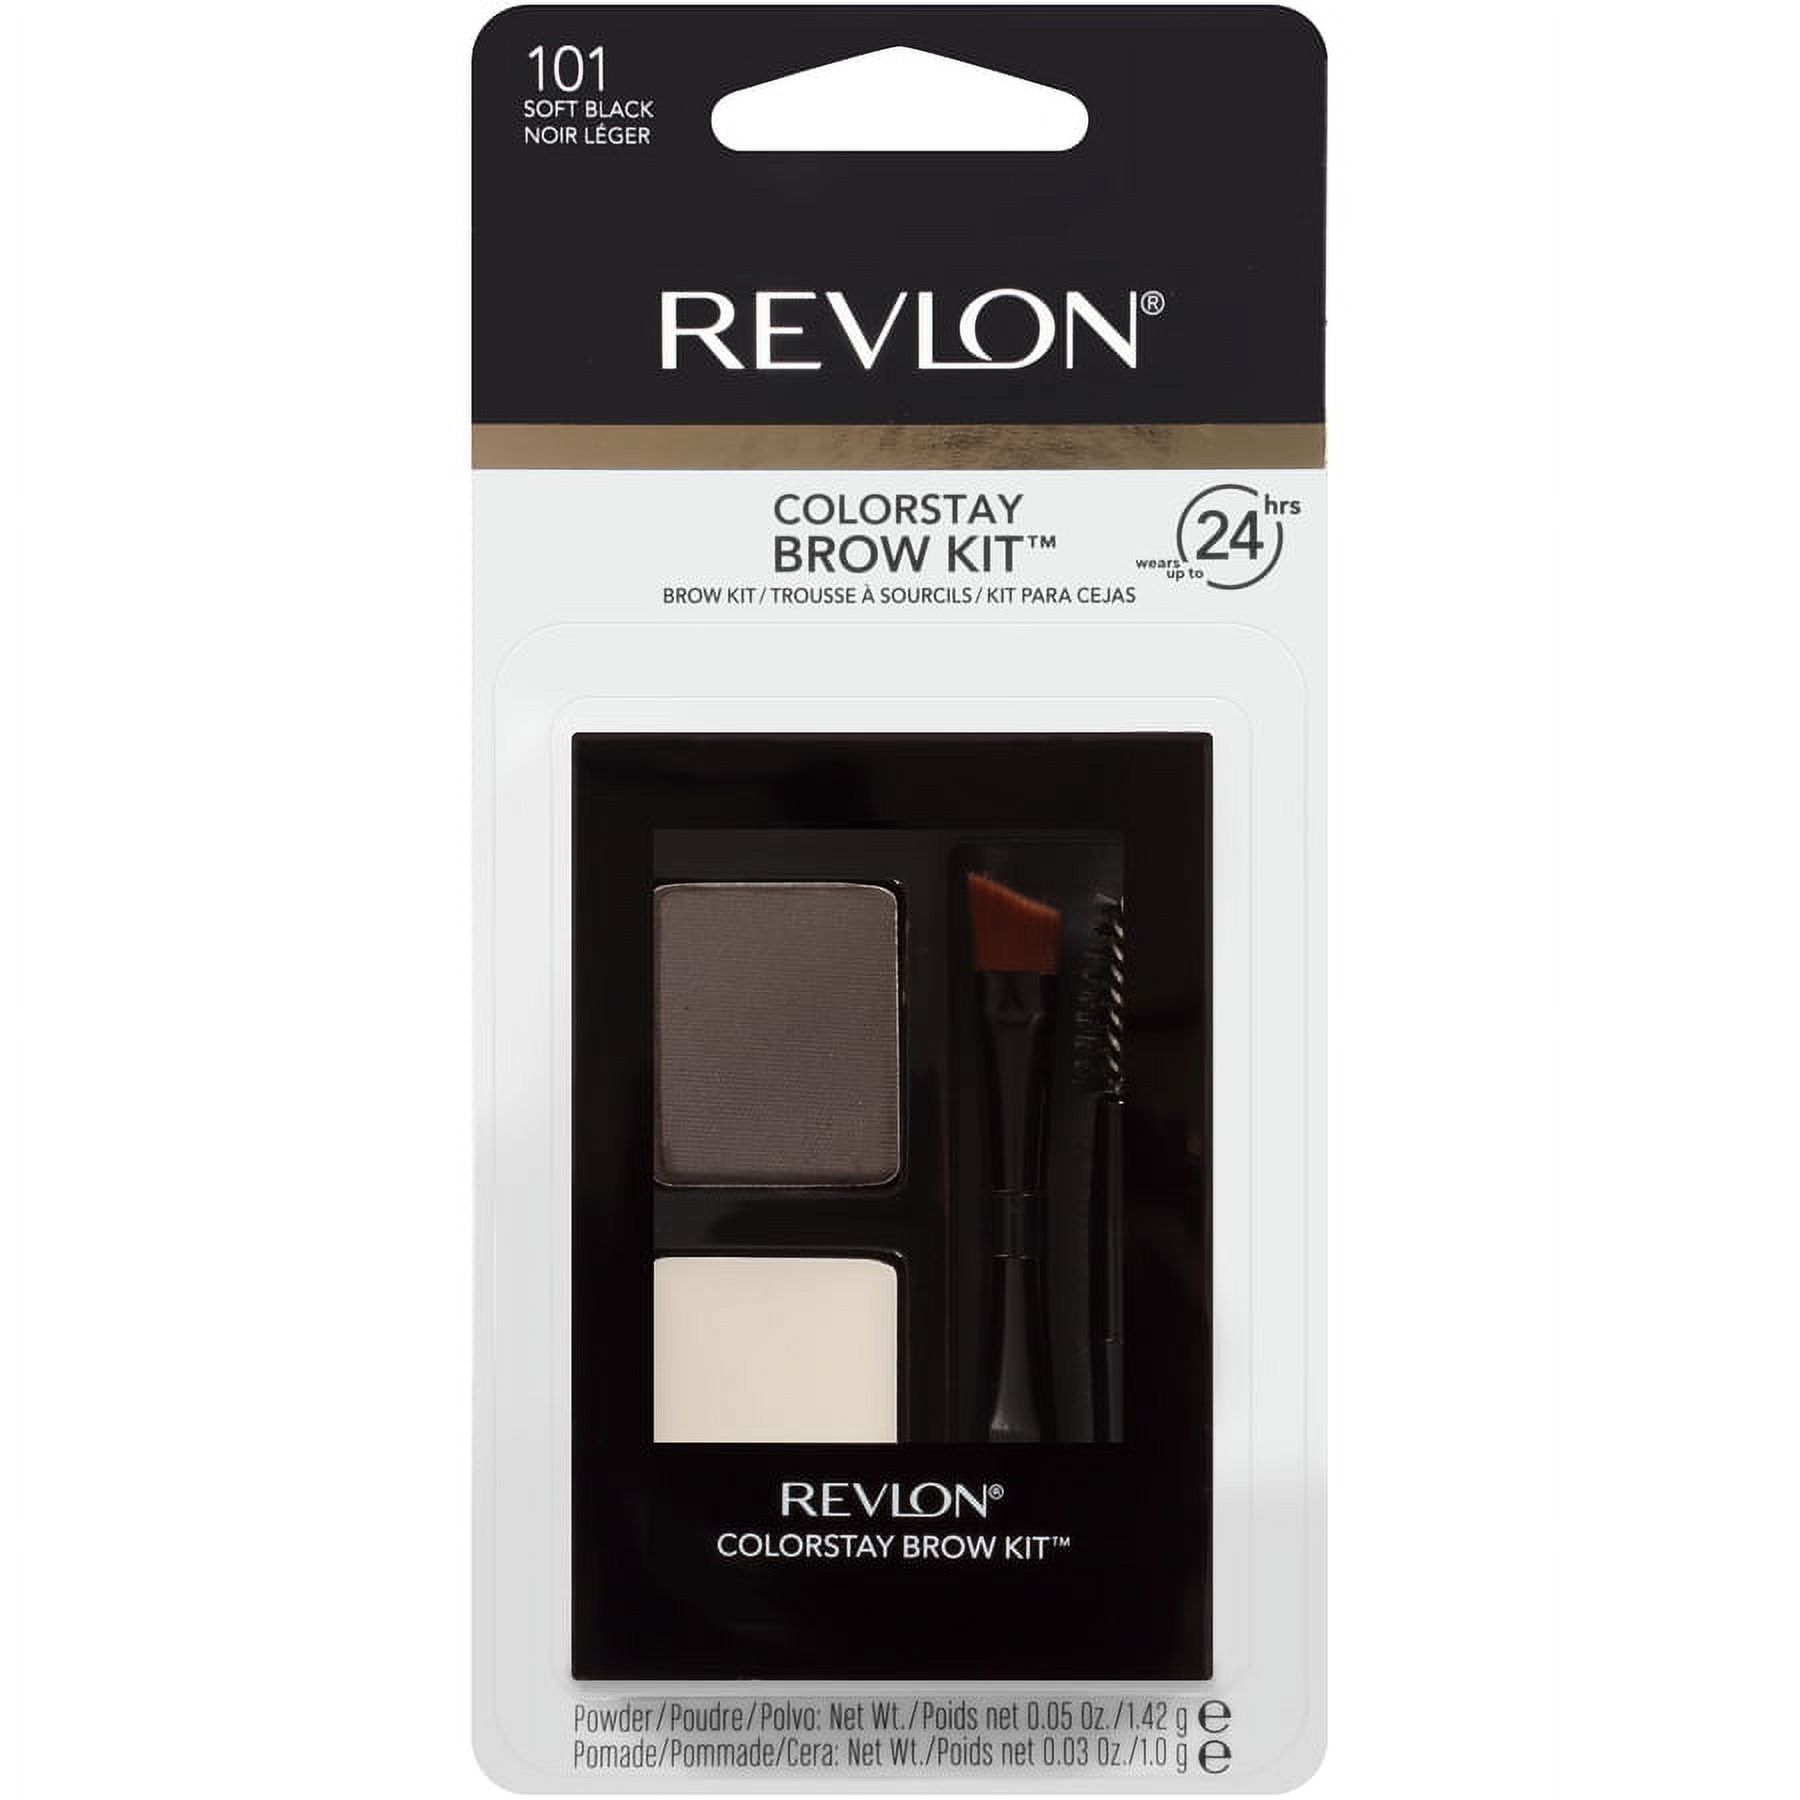 Revlon ColorStay Brow Kit - Soft Black - image 2 of 3